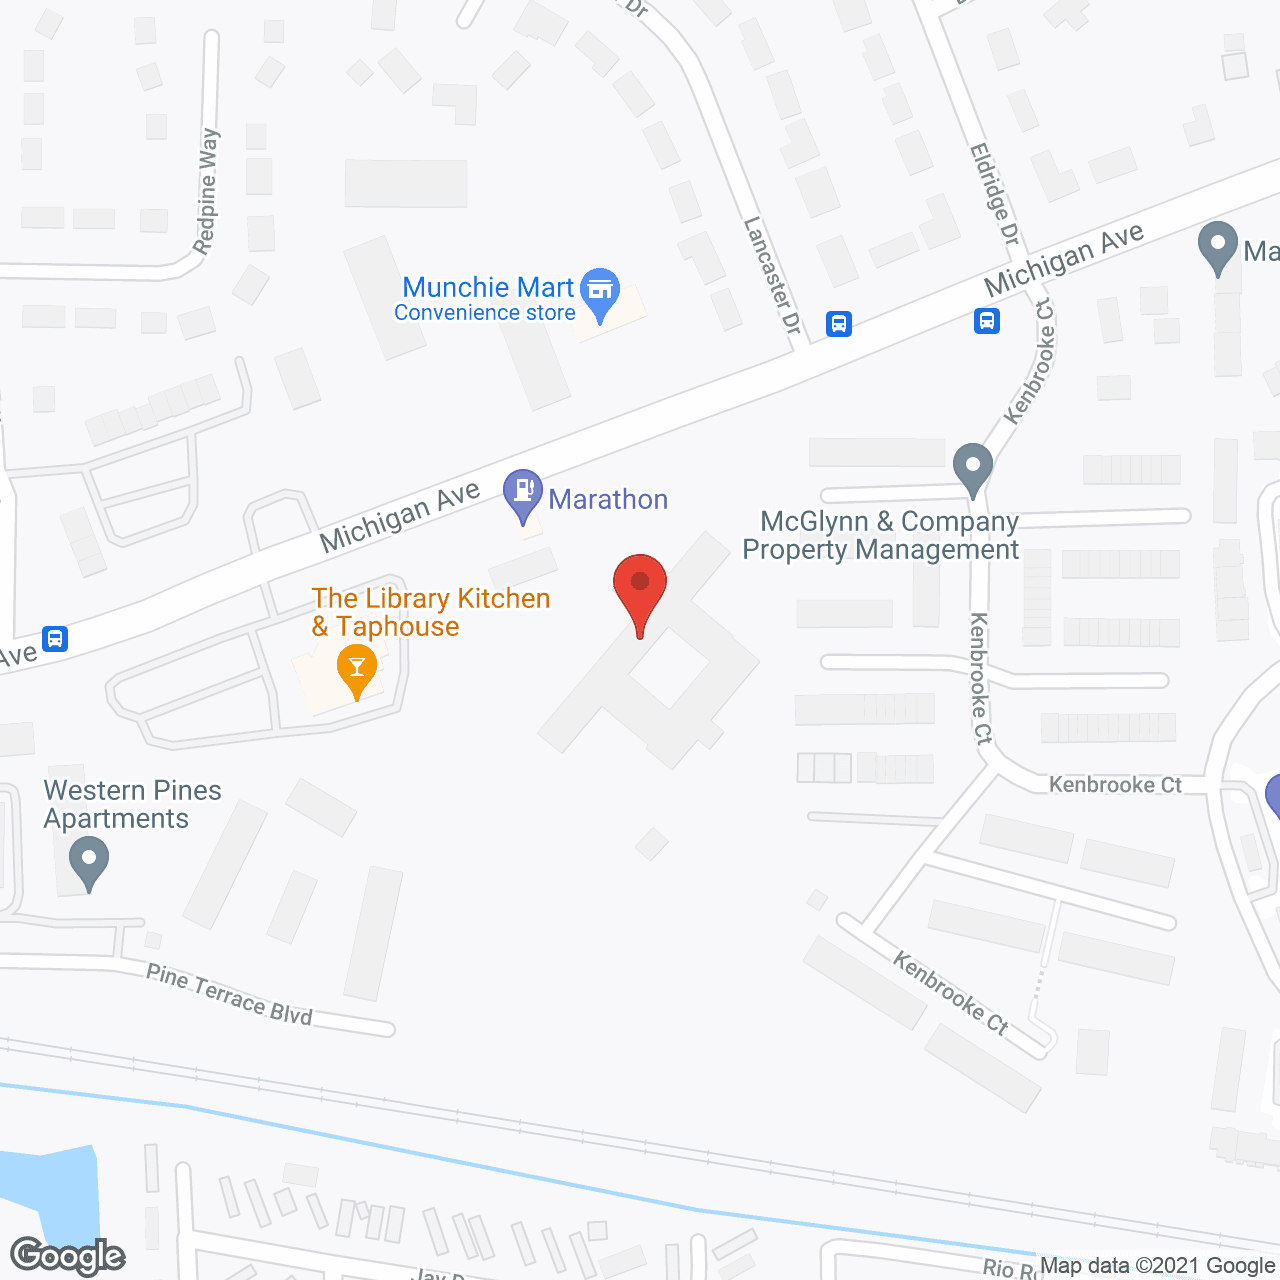 Hallmark in google map